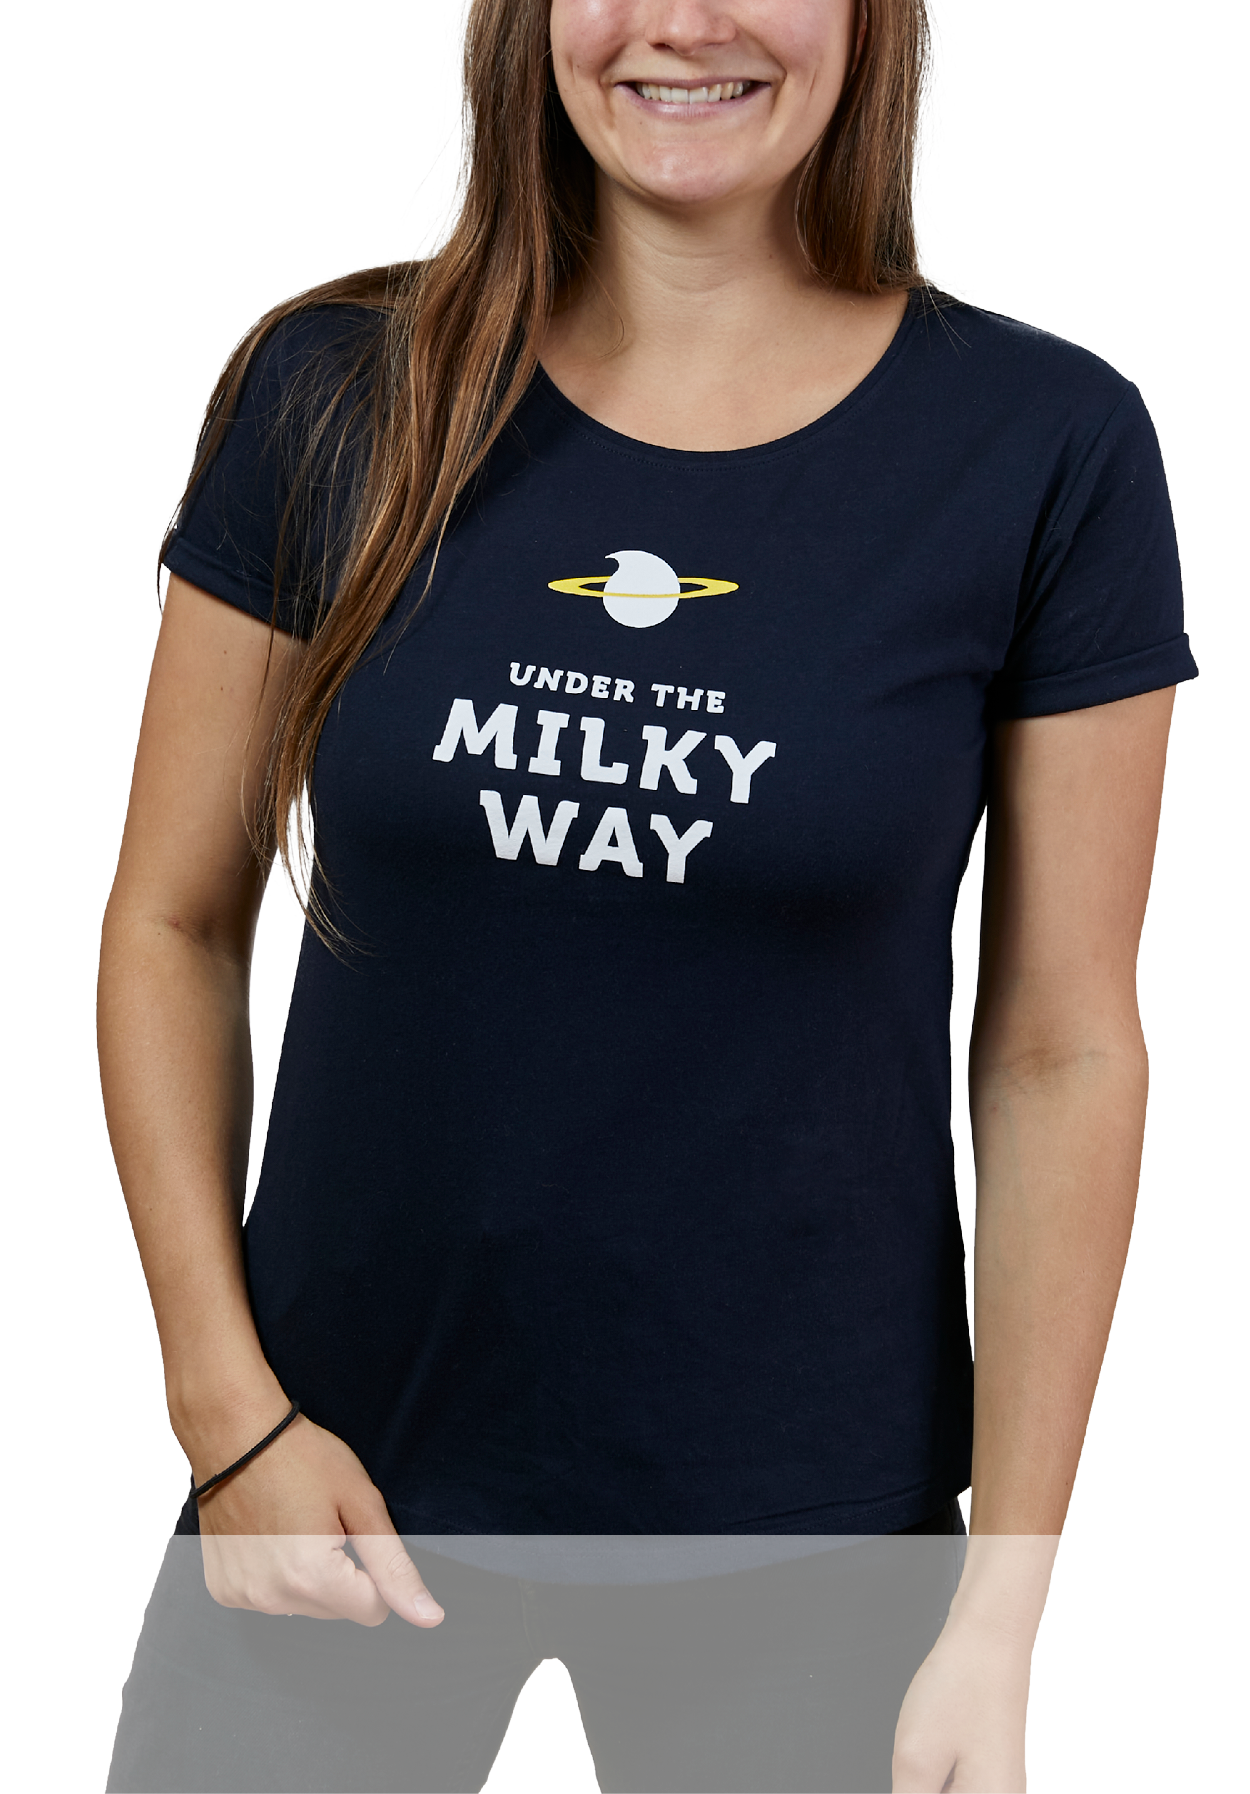 Damen T-Shirt "Under the milky way" 